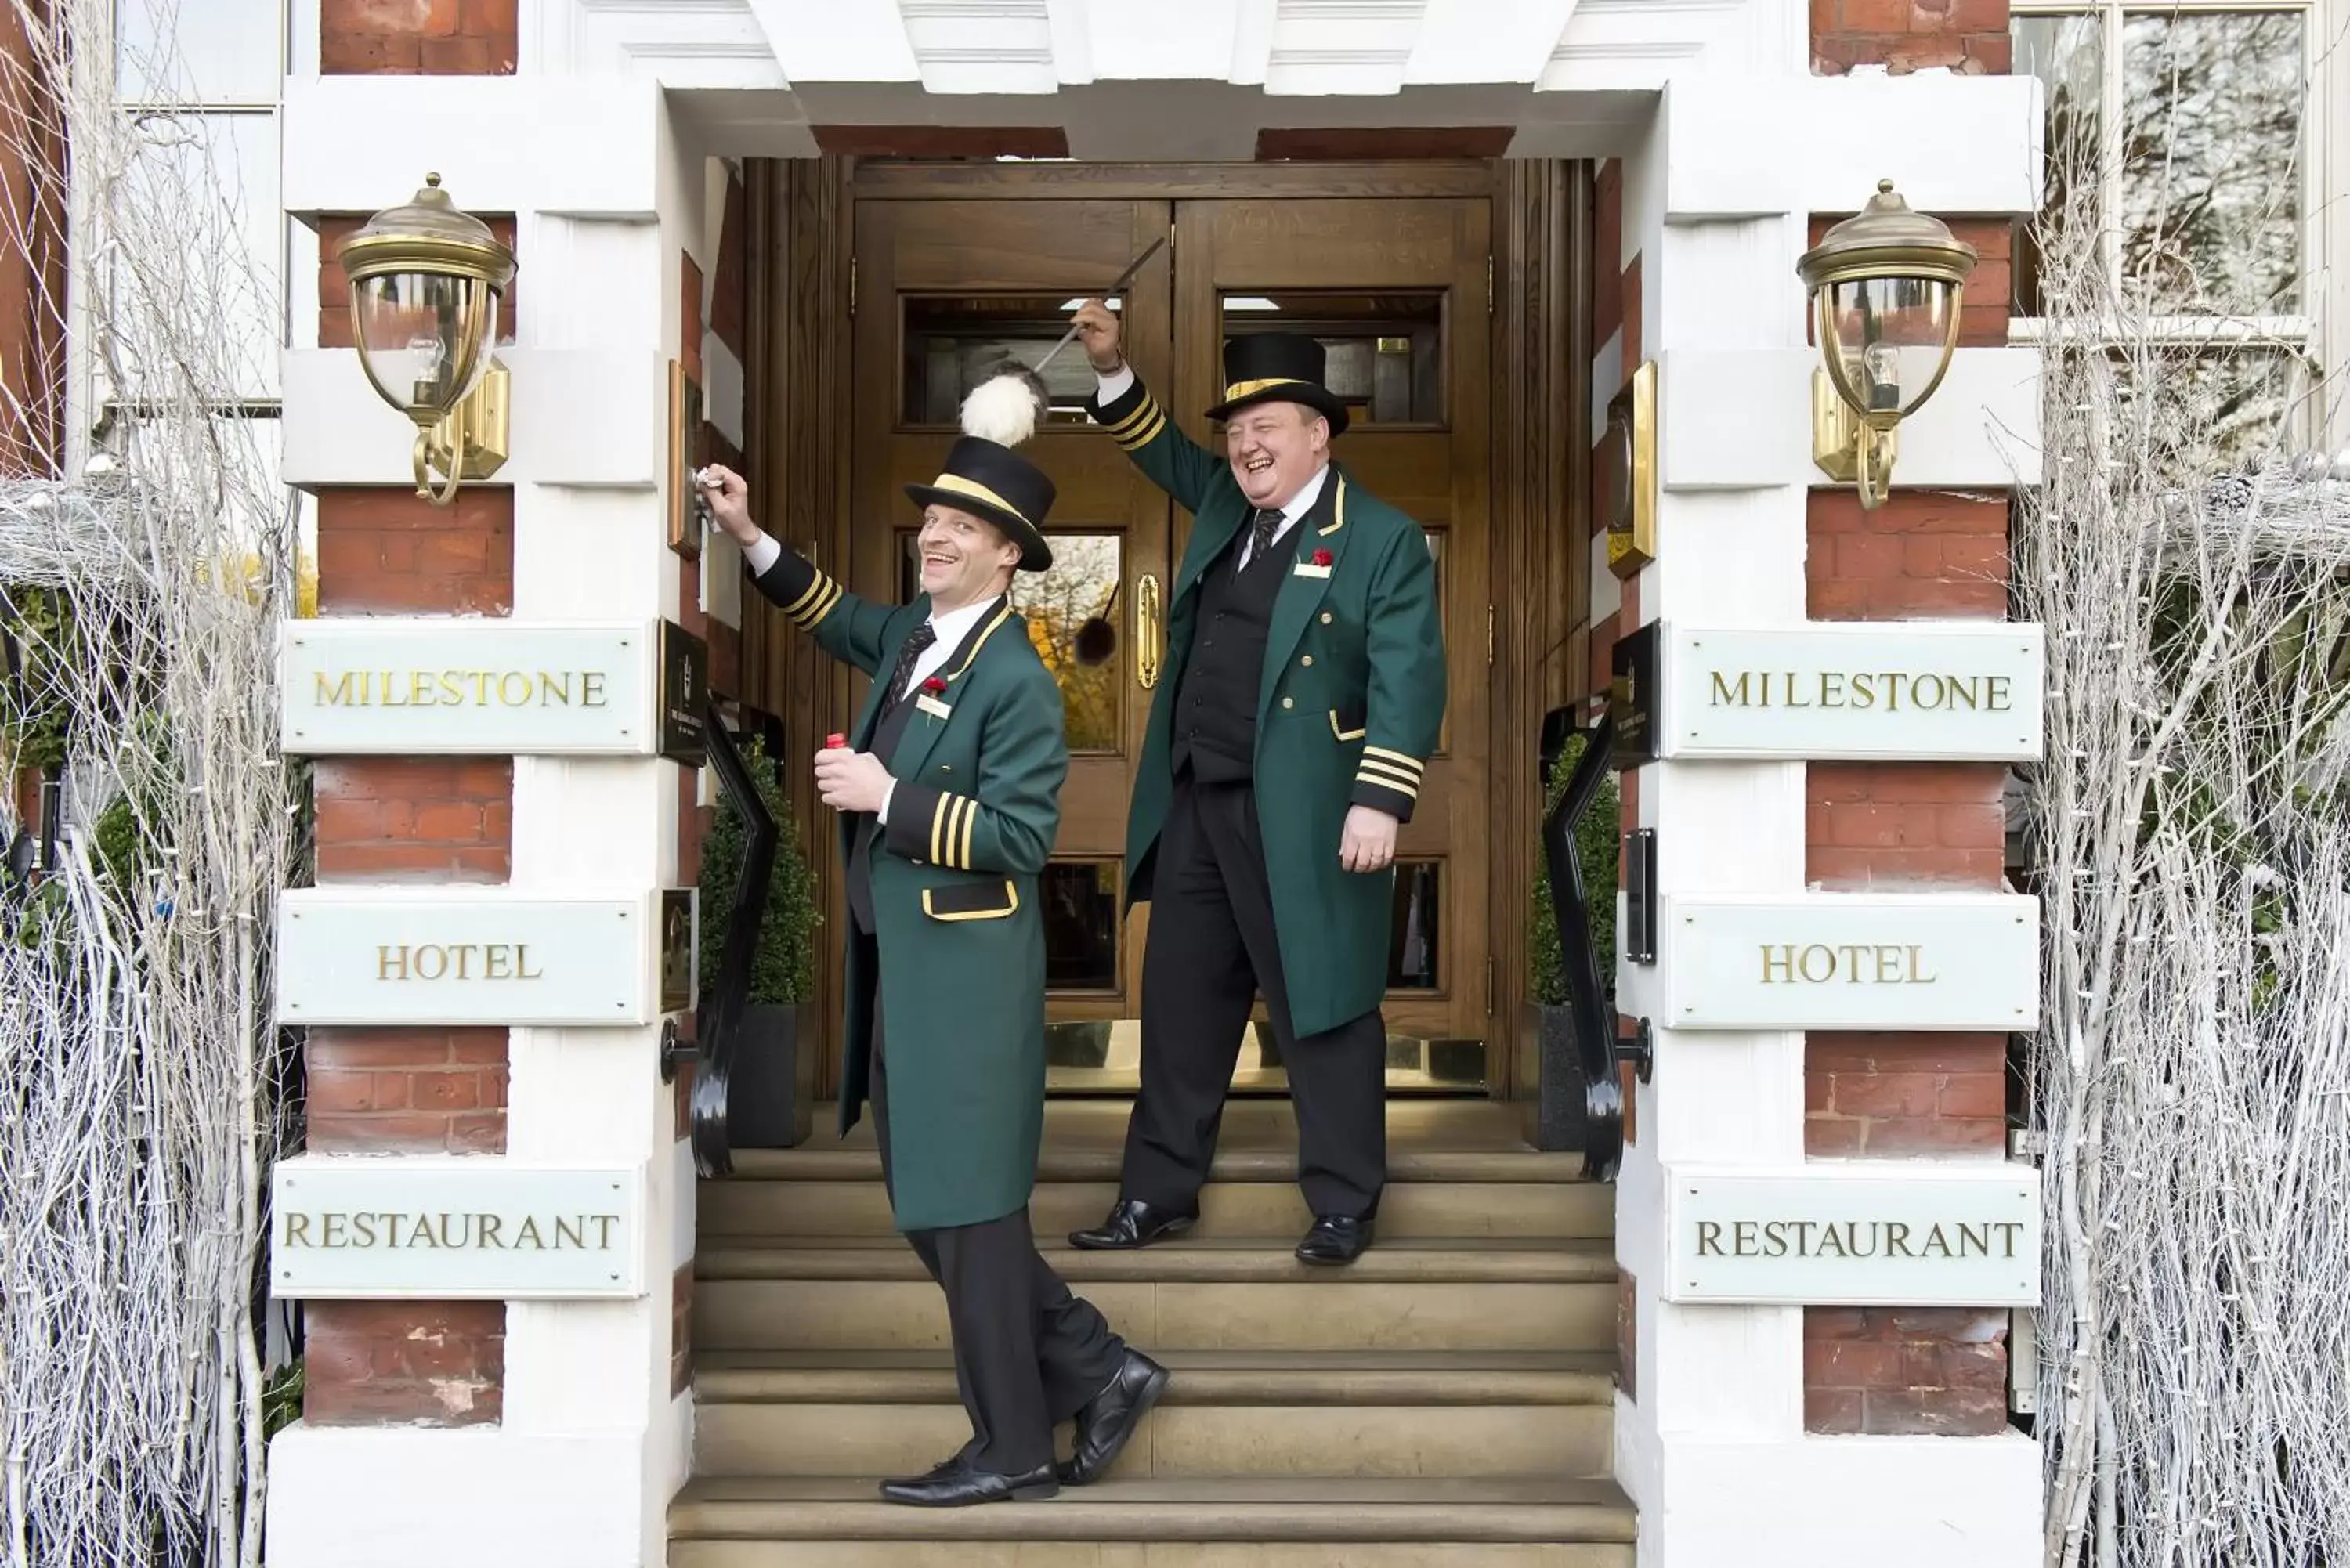 Staff in Milestone Hotel Kensington